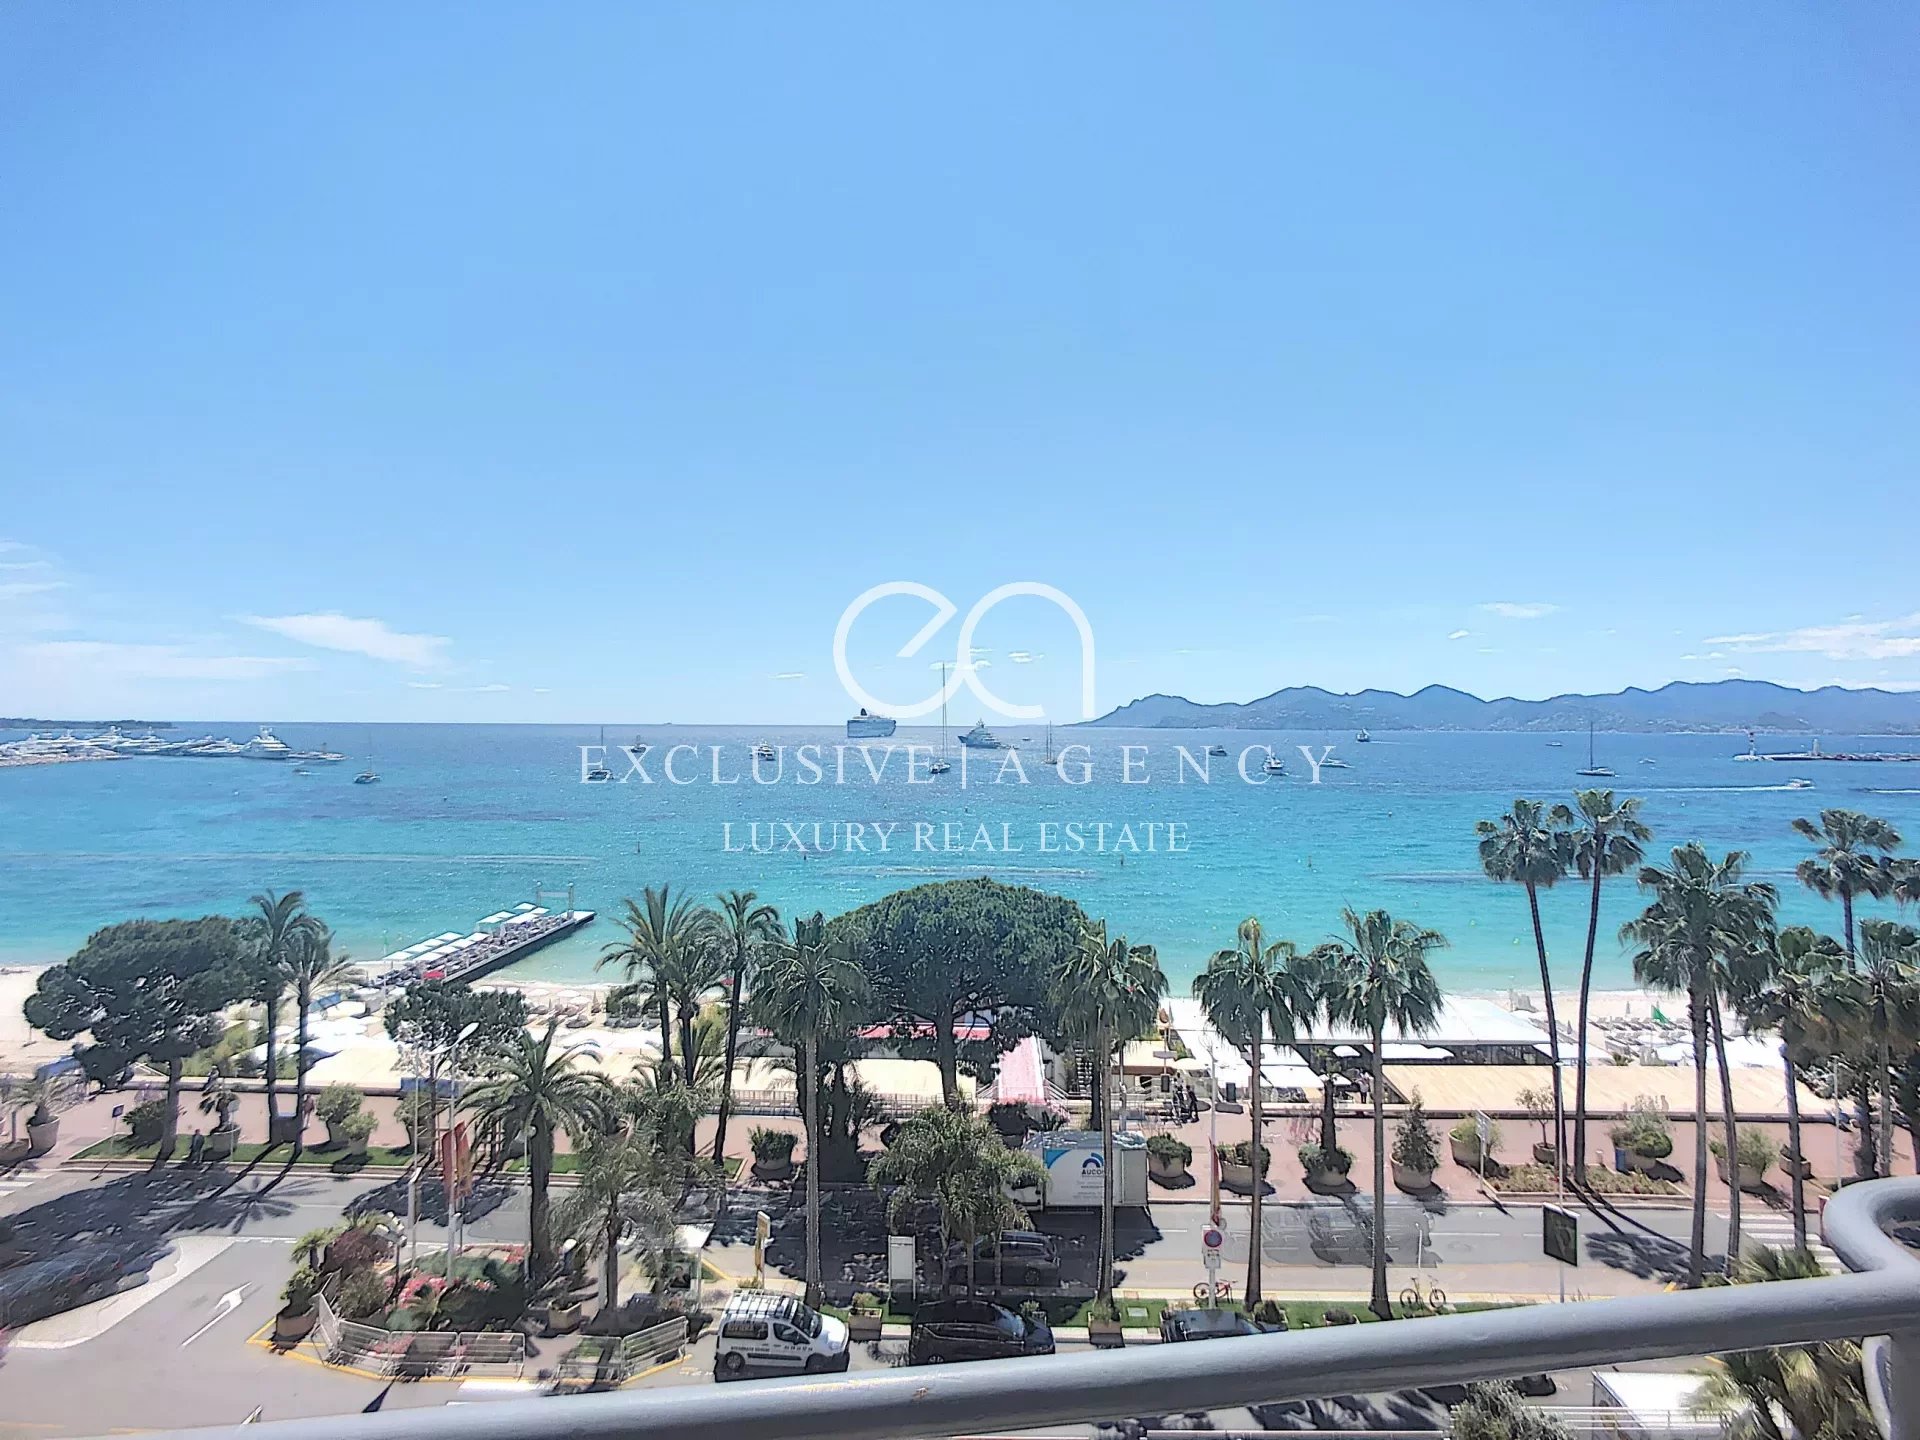 Rental Cannes Croisette 130sqm 3-bedroom apartment terrace sea view